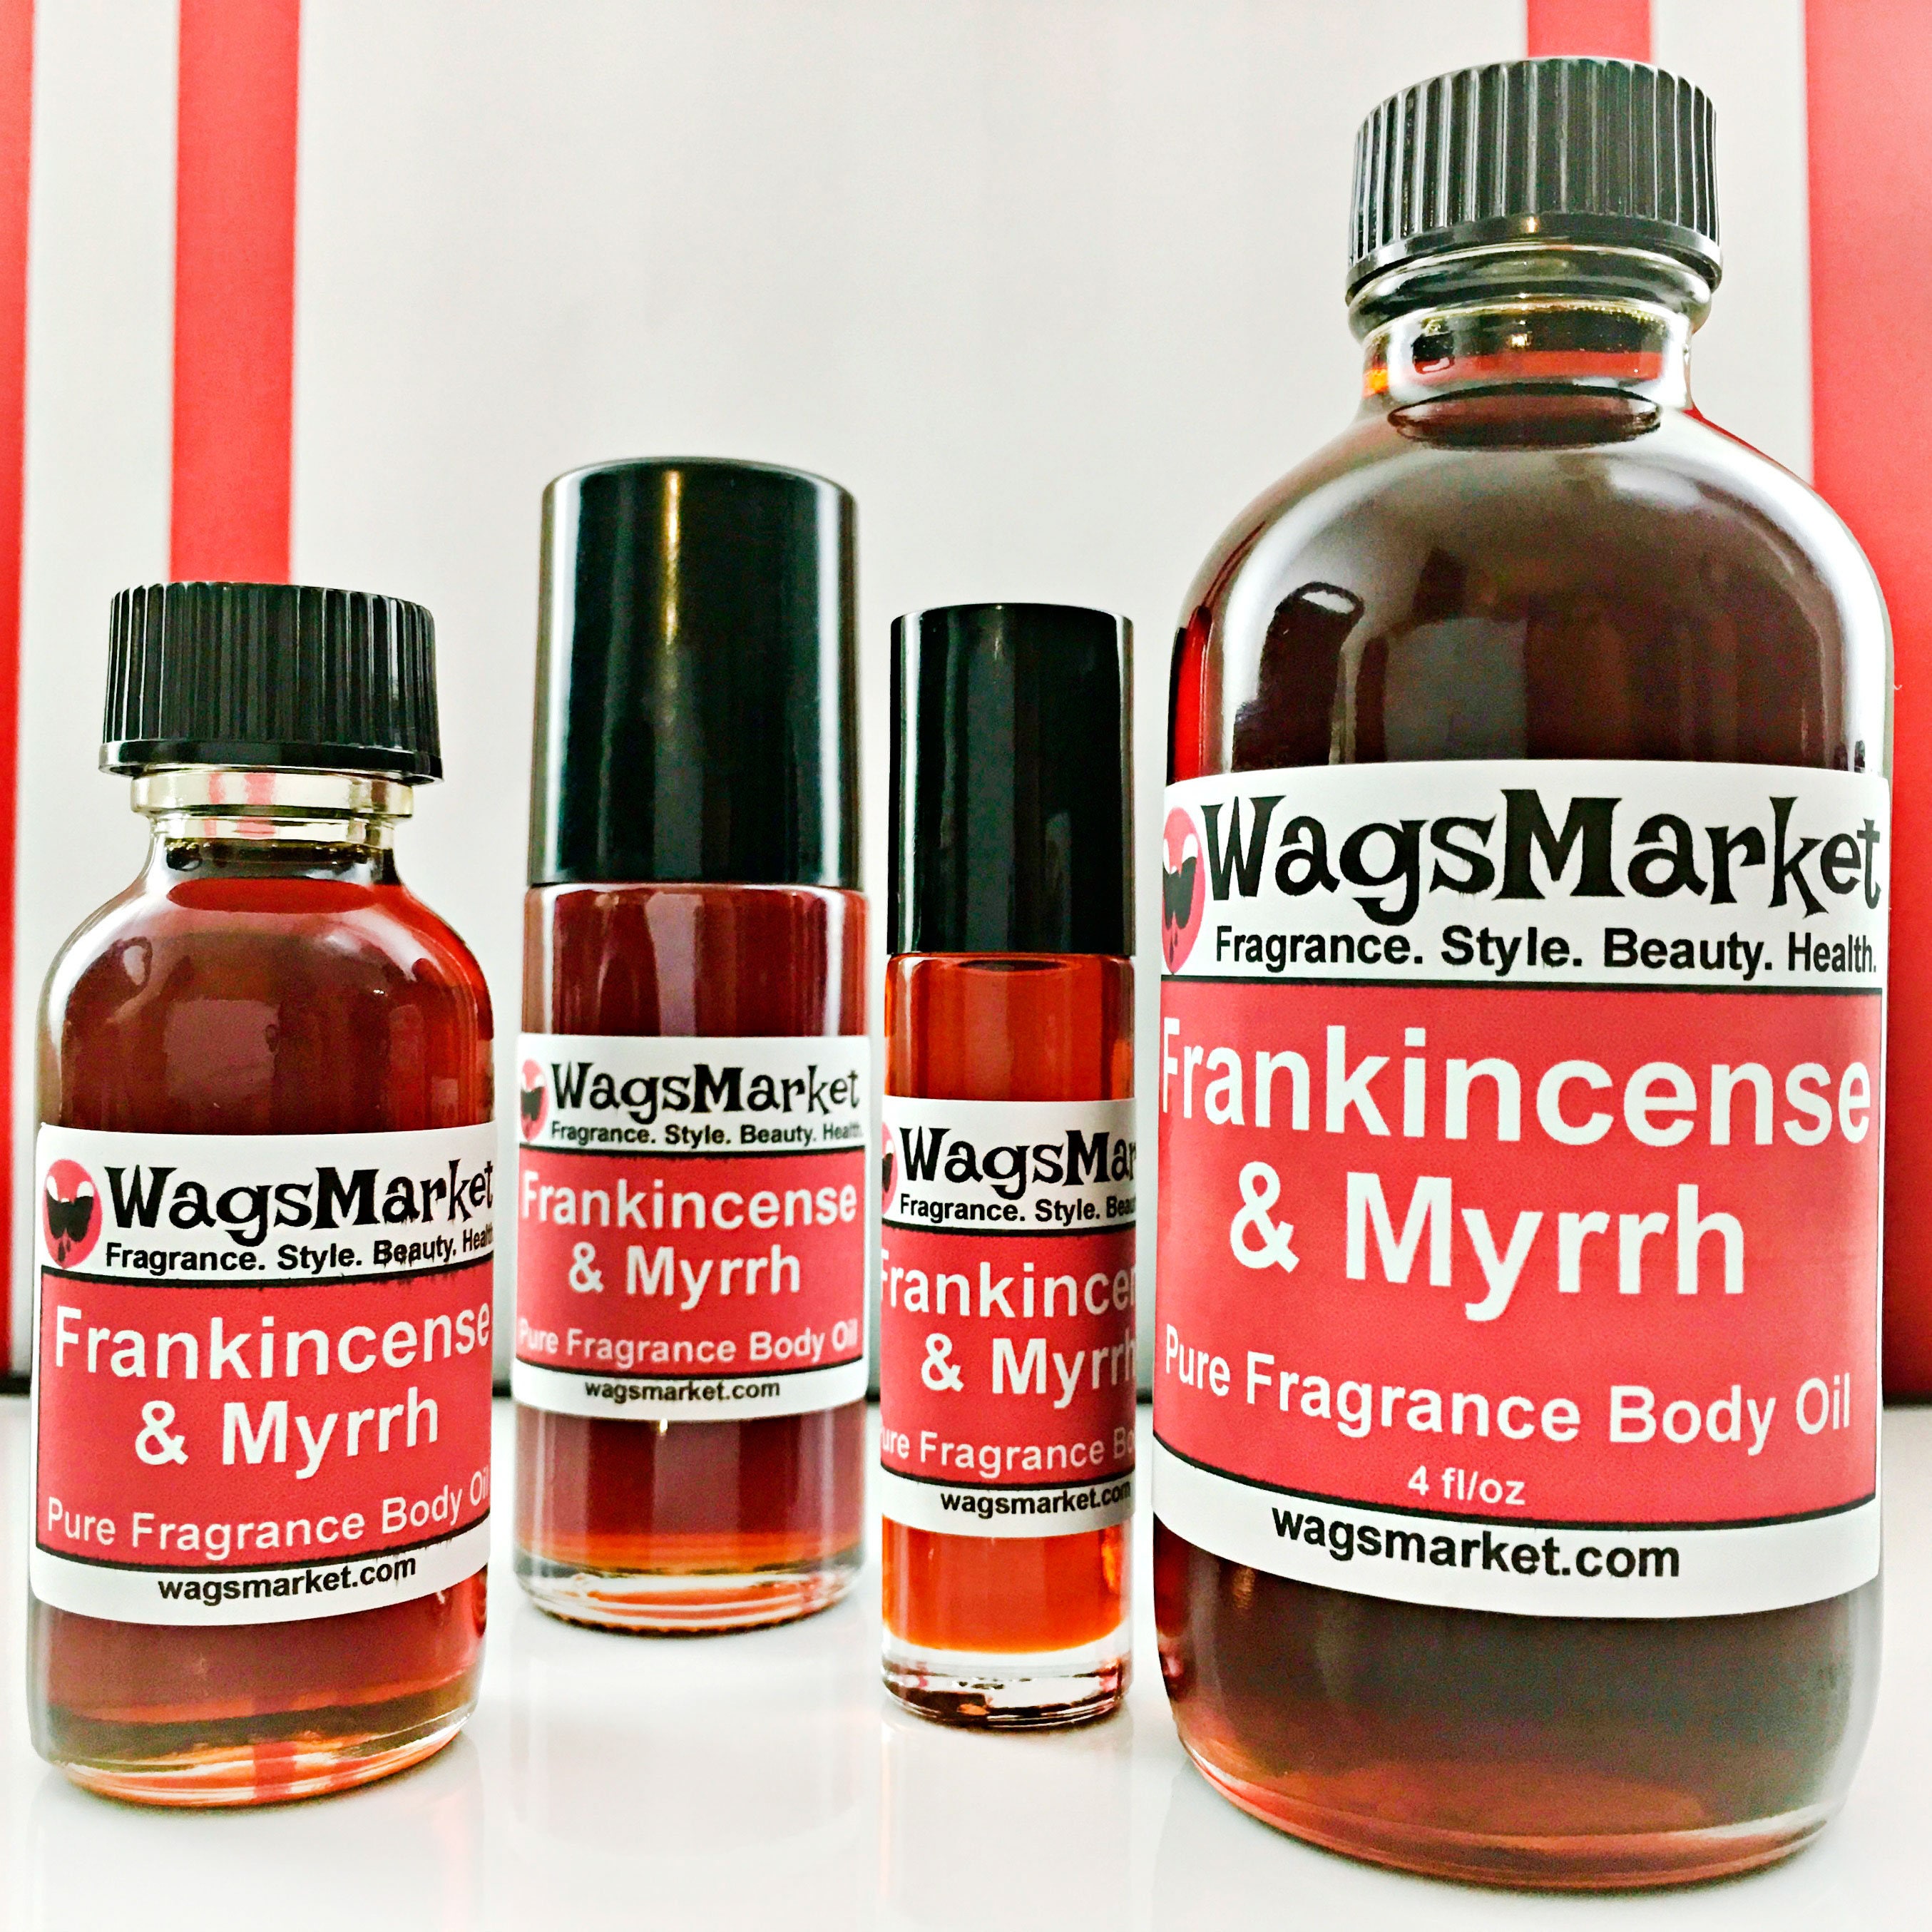 BioMed Balance Frankincense & Myrrh Essential Oil, Organic - Azure